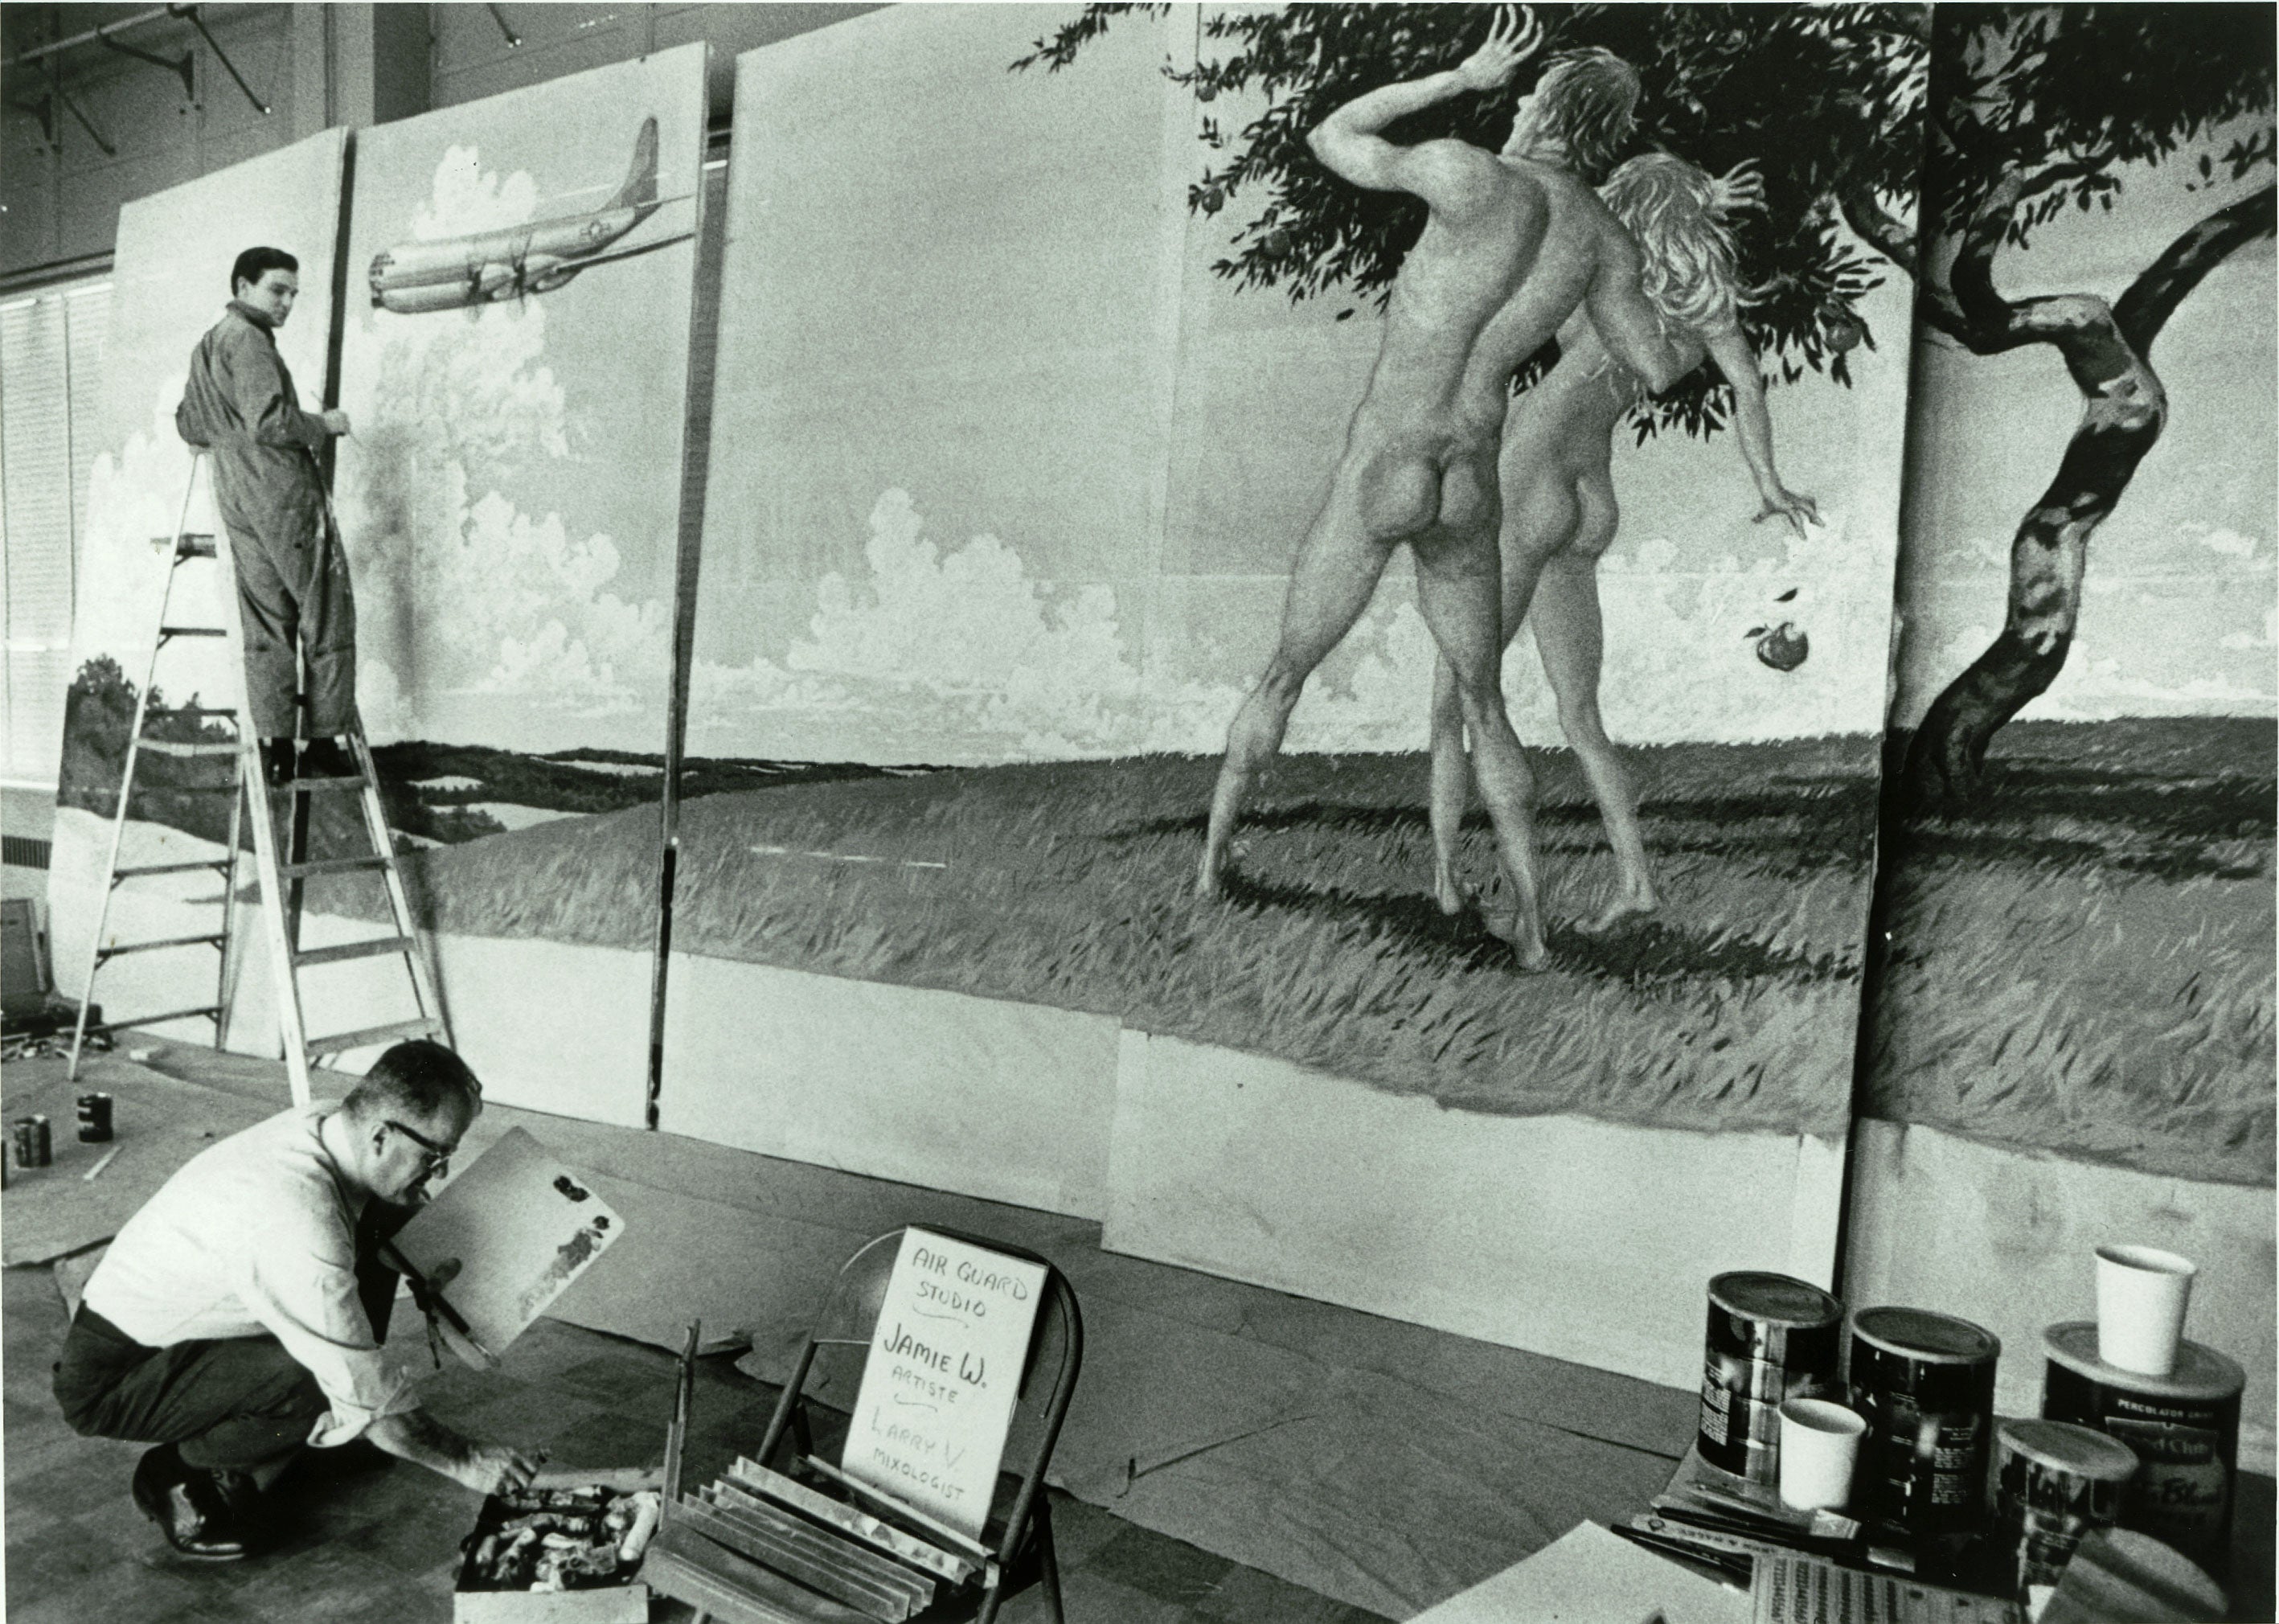 Bare buttocks of Adam and Eve trigger military art controversy